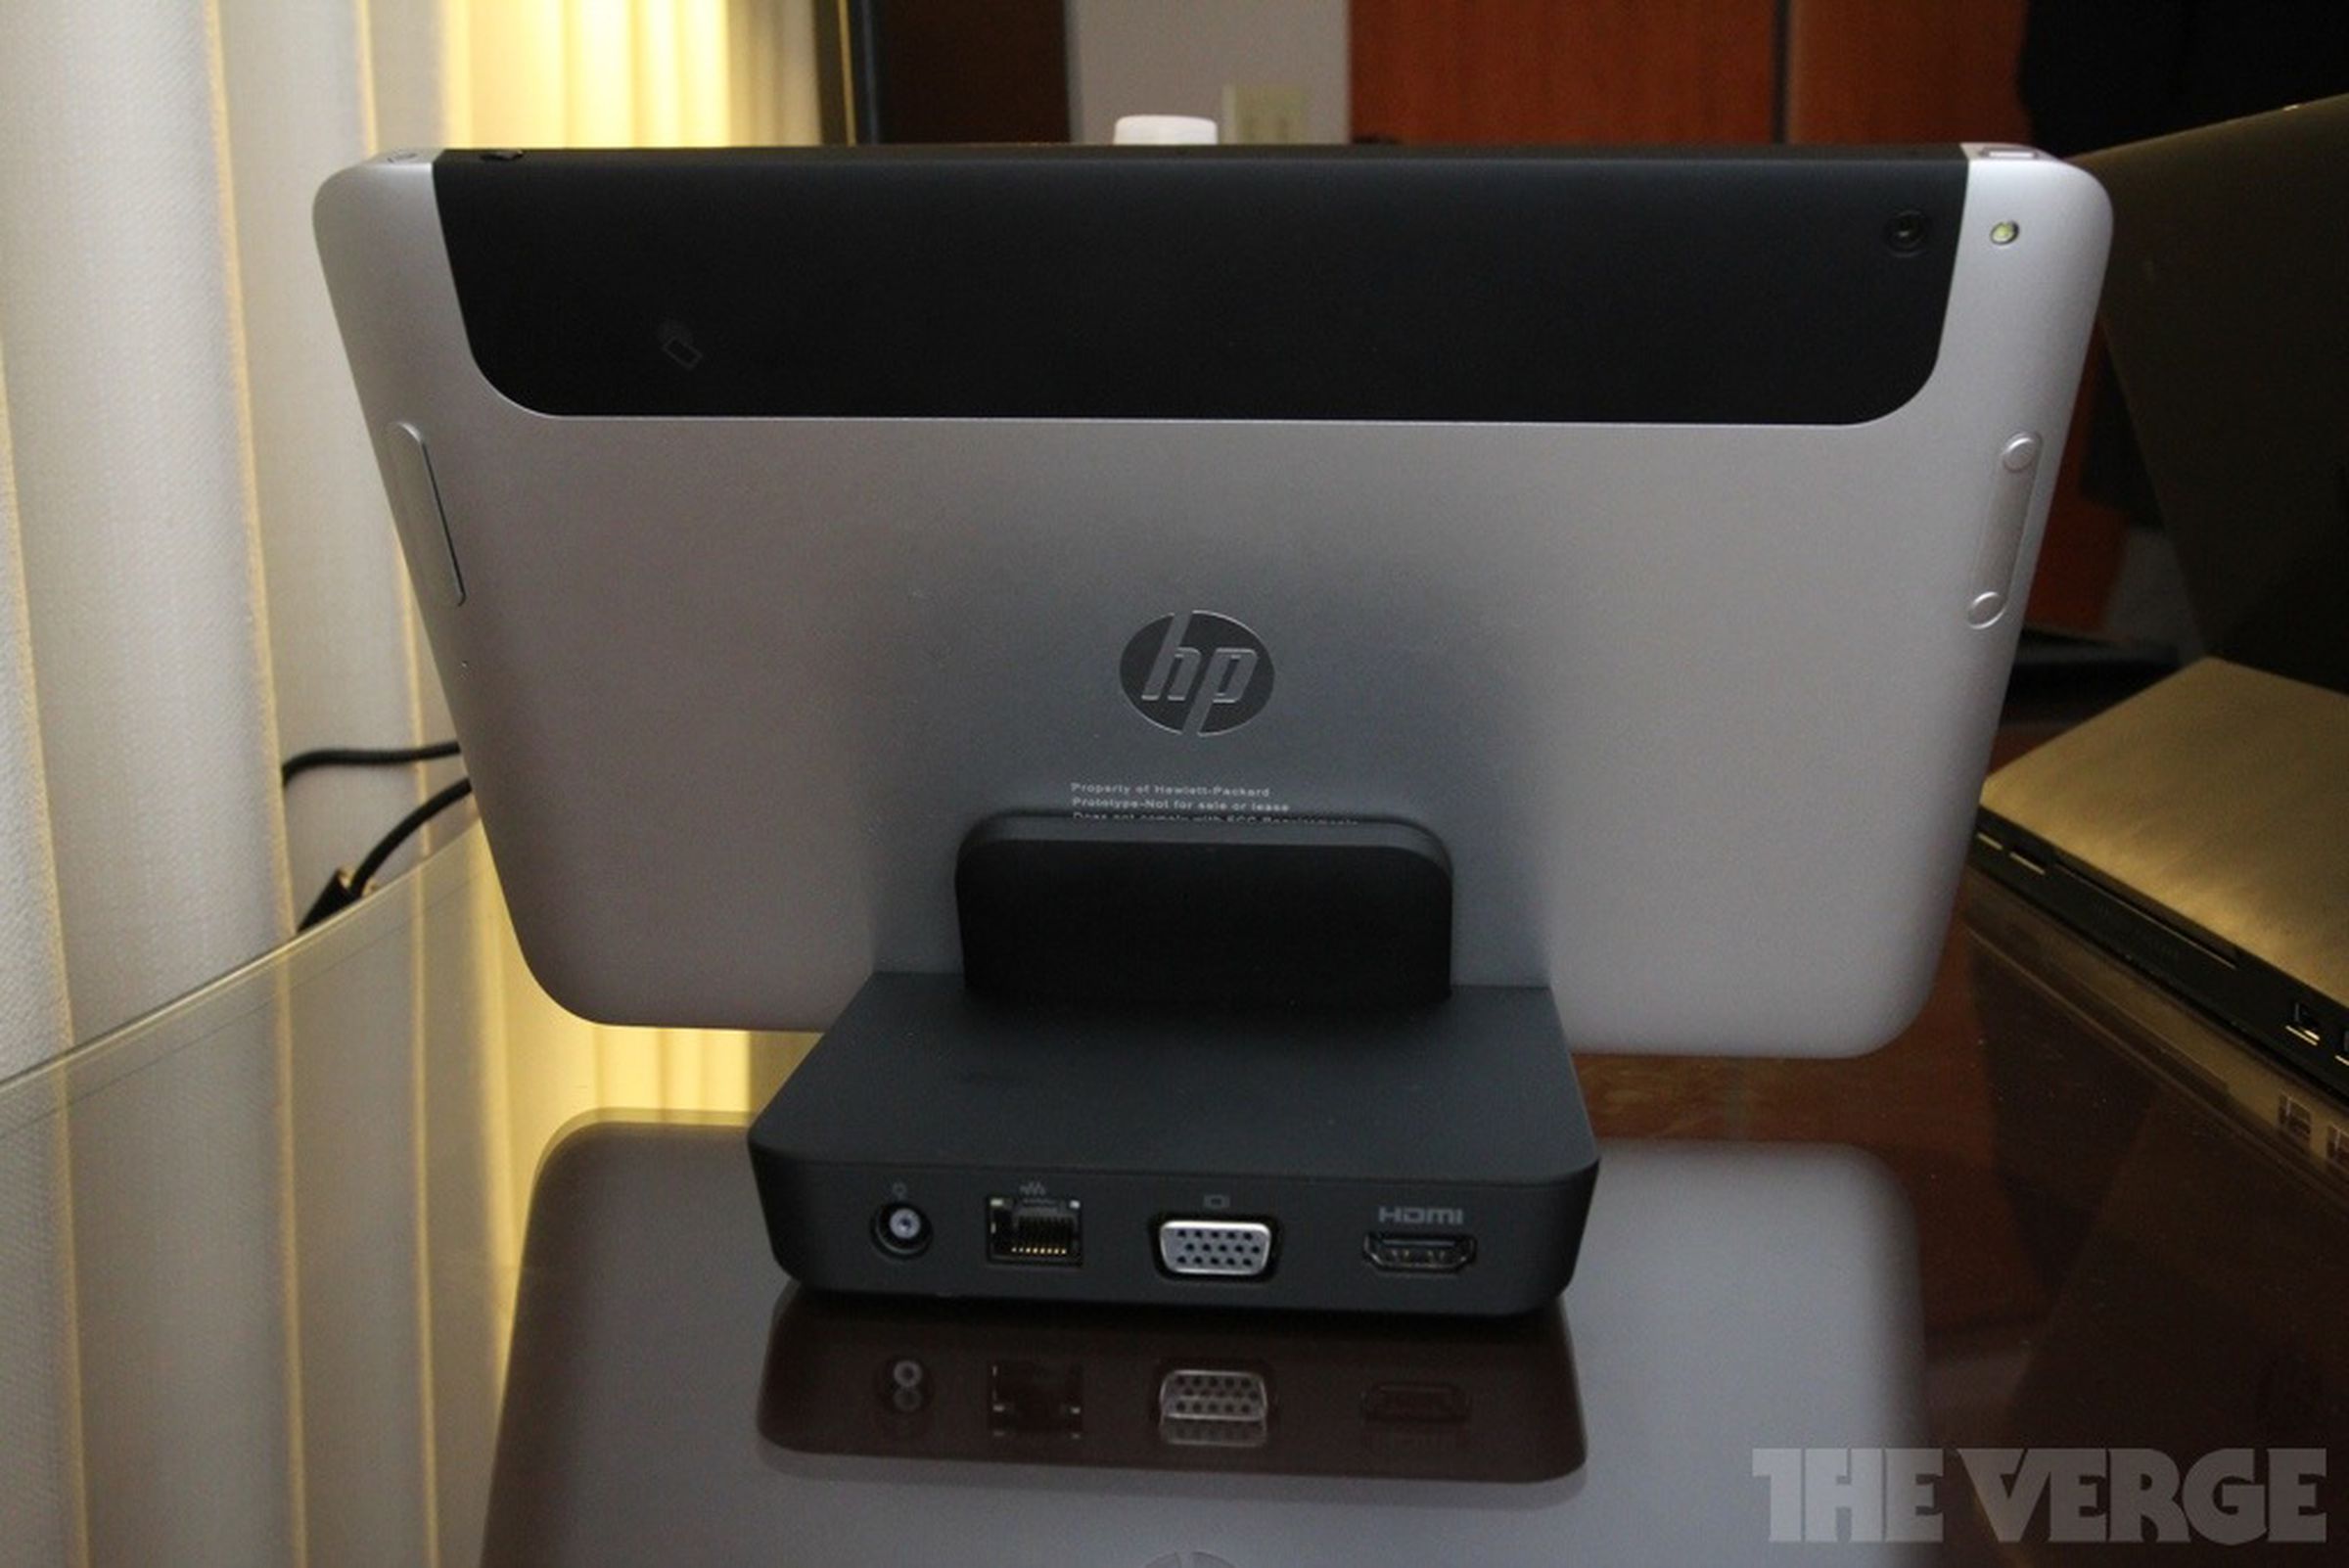 HP ElitePad 900 hands-on photos